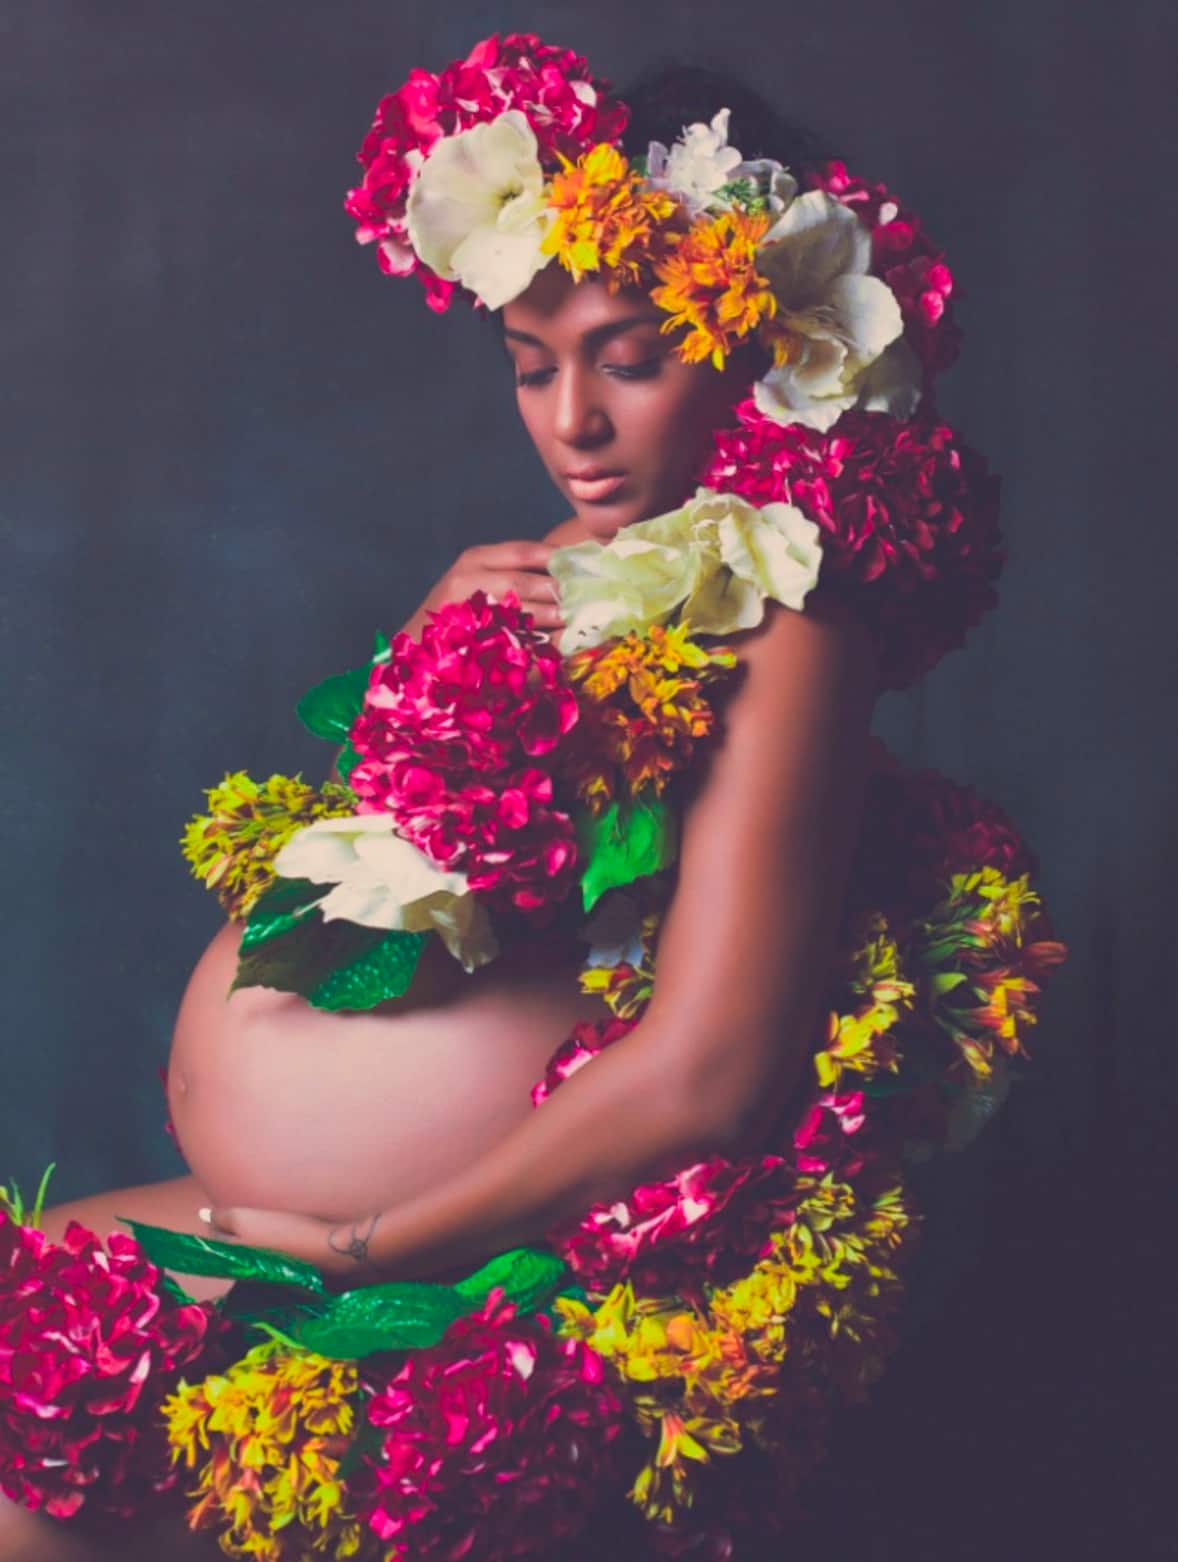 Shveta's pregnancy photoshoot is bold and inspiring